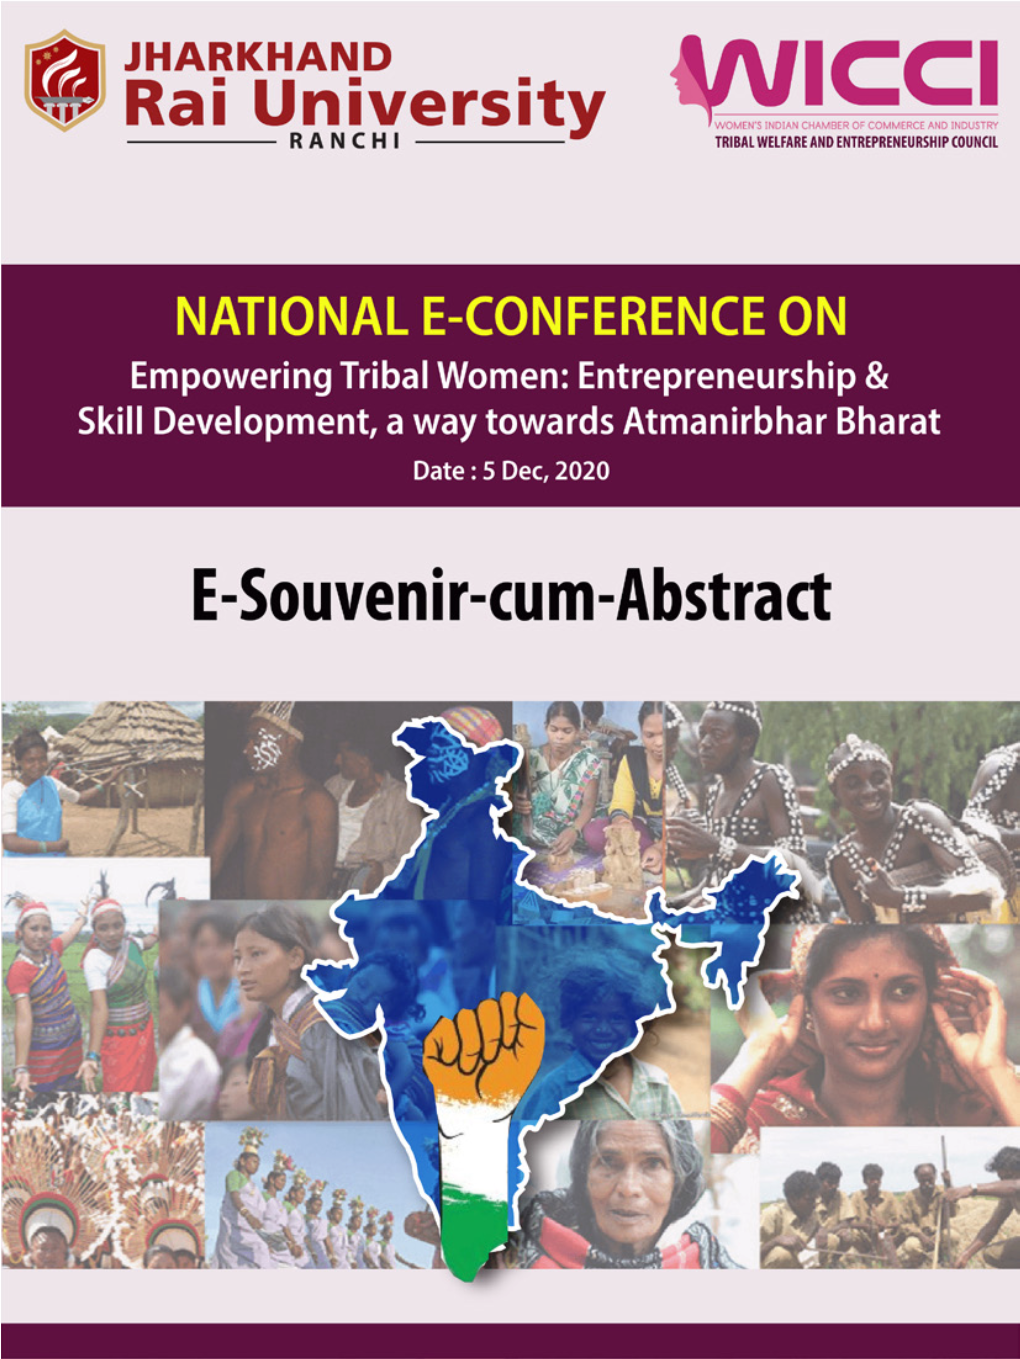 Jharkhand Rai University National E-Conference on “Empowering Tribal Women: Entrepreneurship & Skill Development, a Way Towards Atmanirbhar Bharat”